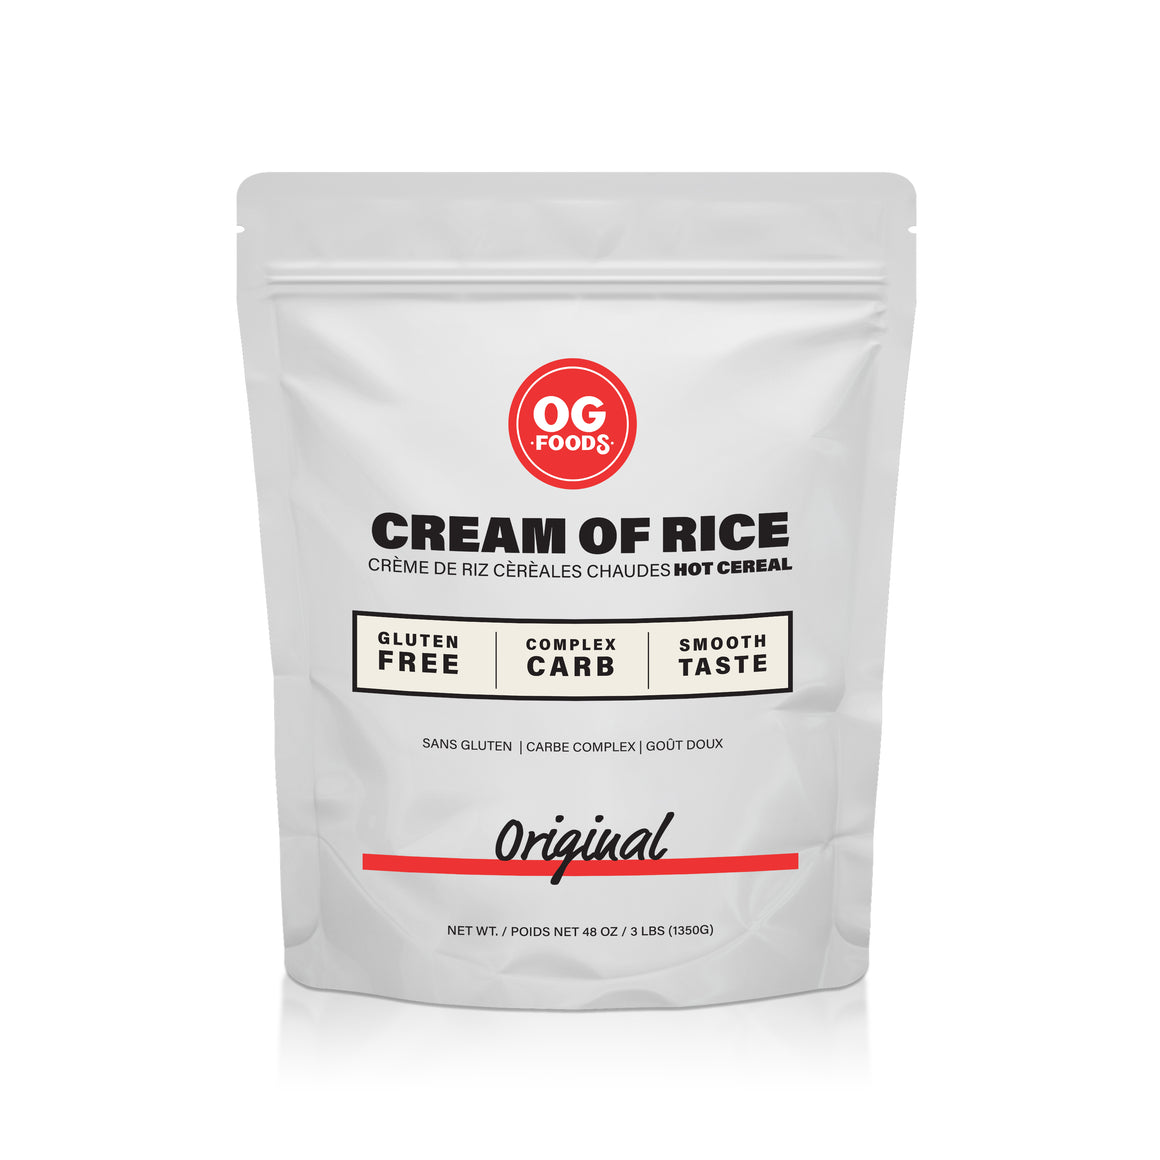 OG Cream of Rice 3 LBS